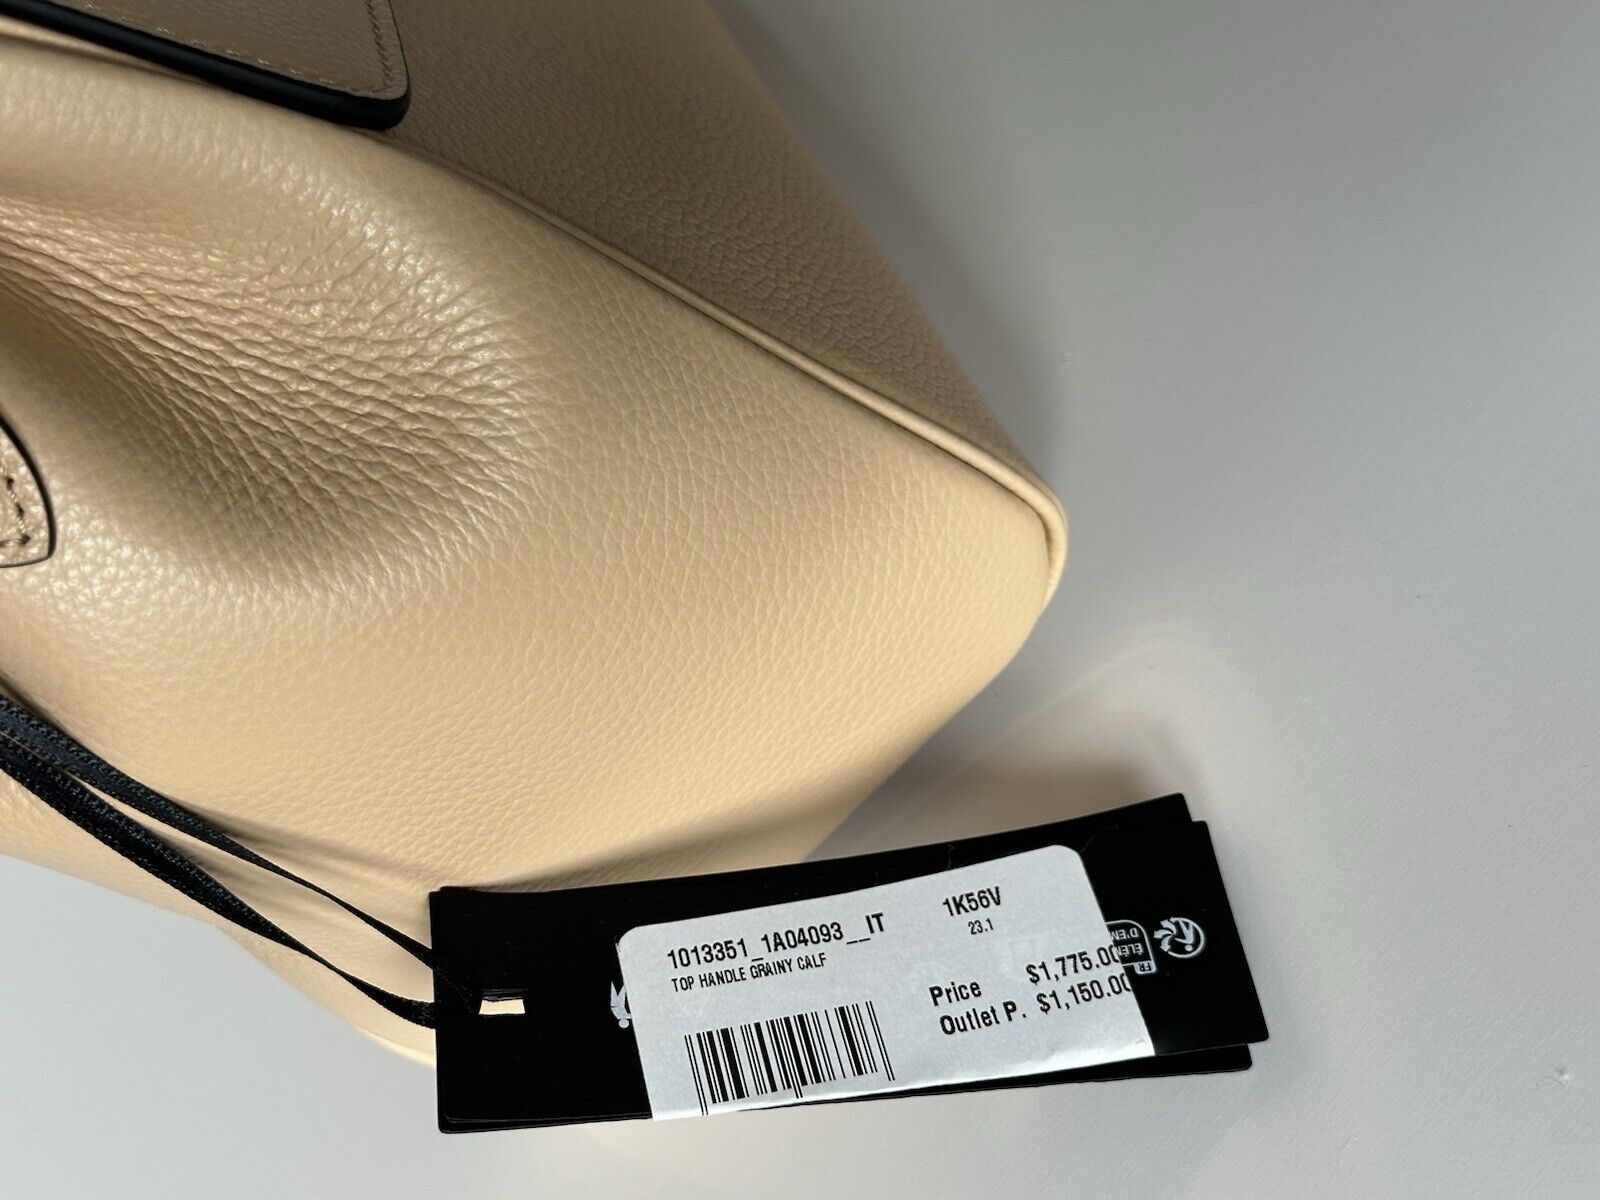 Versace Top Handle Grainy Calf Leather Beige Shoulder Bag 1013351 IT NWT $1775